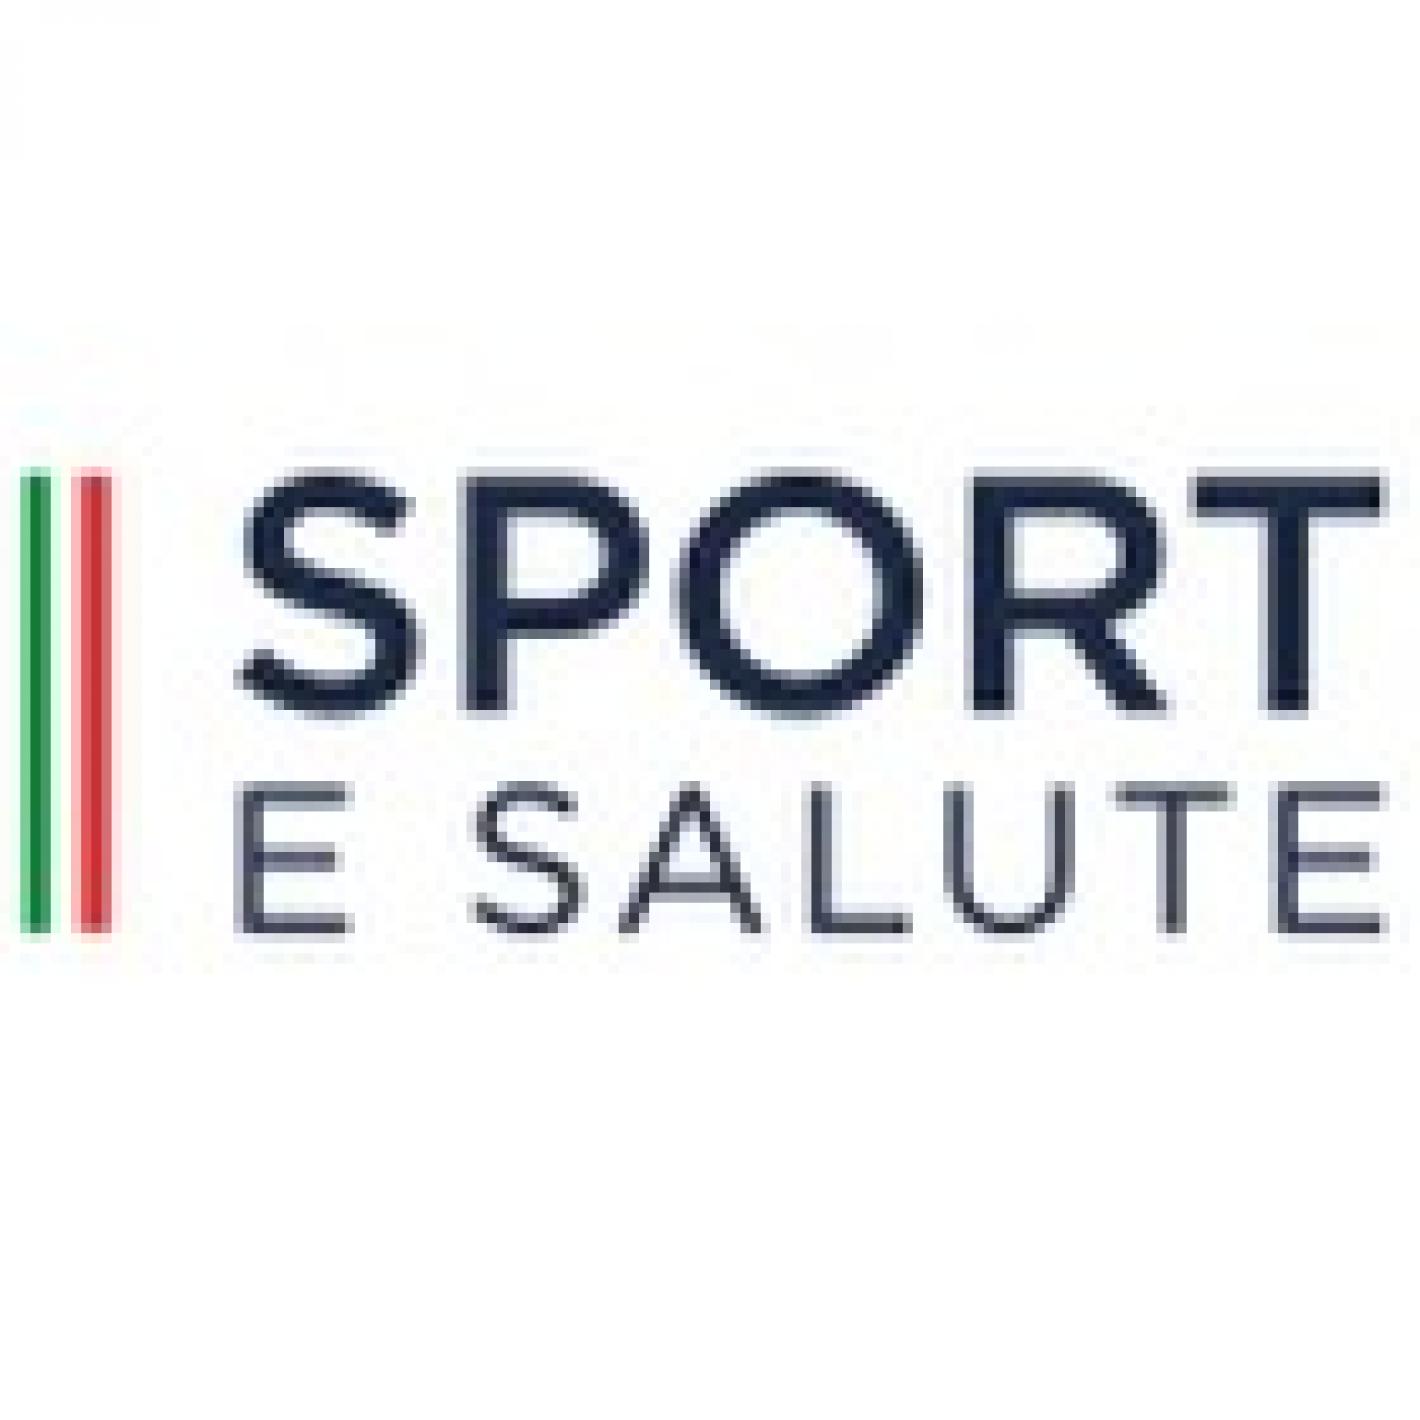 images/joomgallery/details/piemonte_17/medium/sport_e_salute_logo_20210722_1722599876.jpg